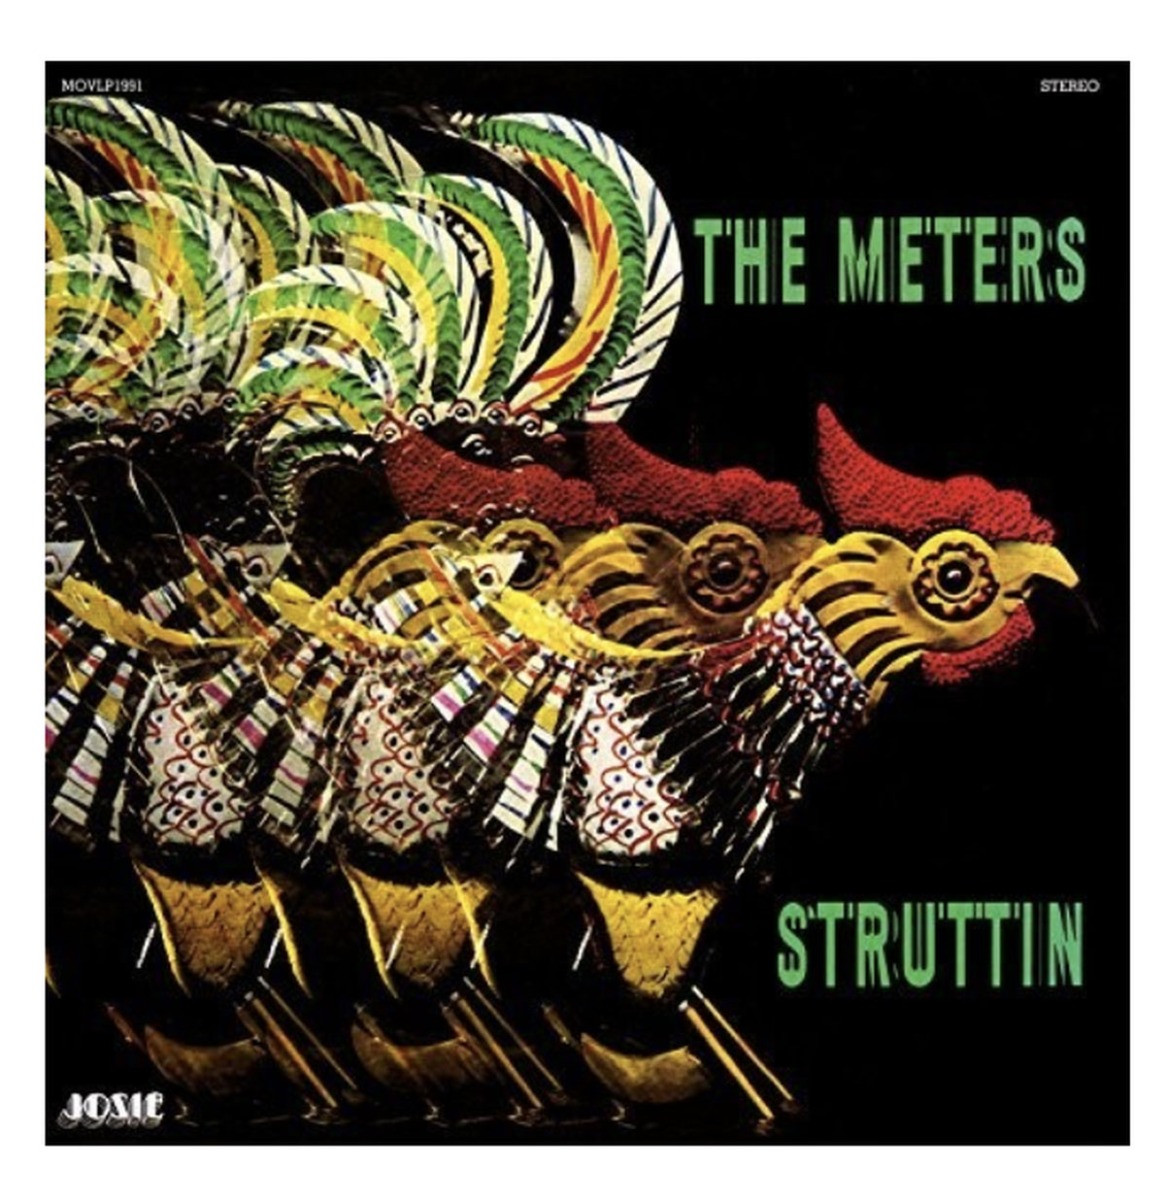 The Meters - Struttin LP